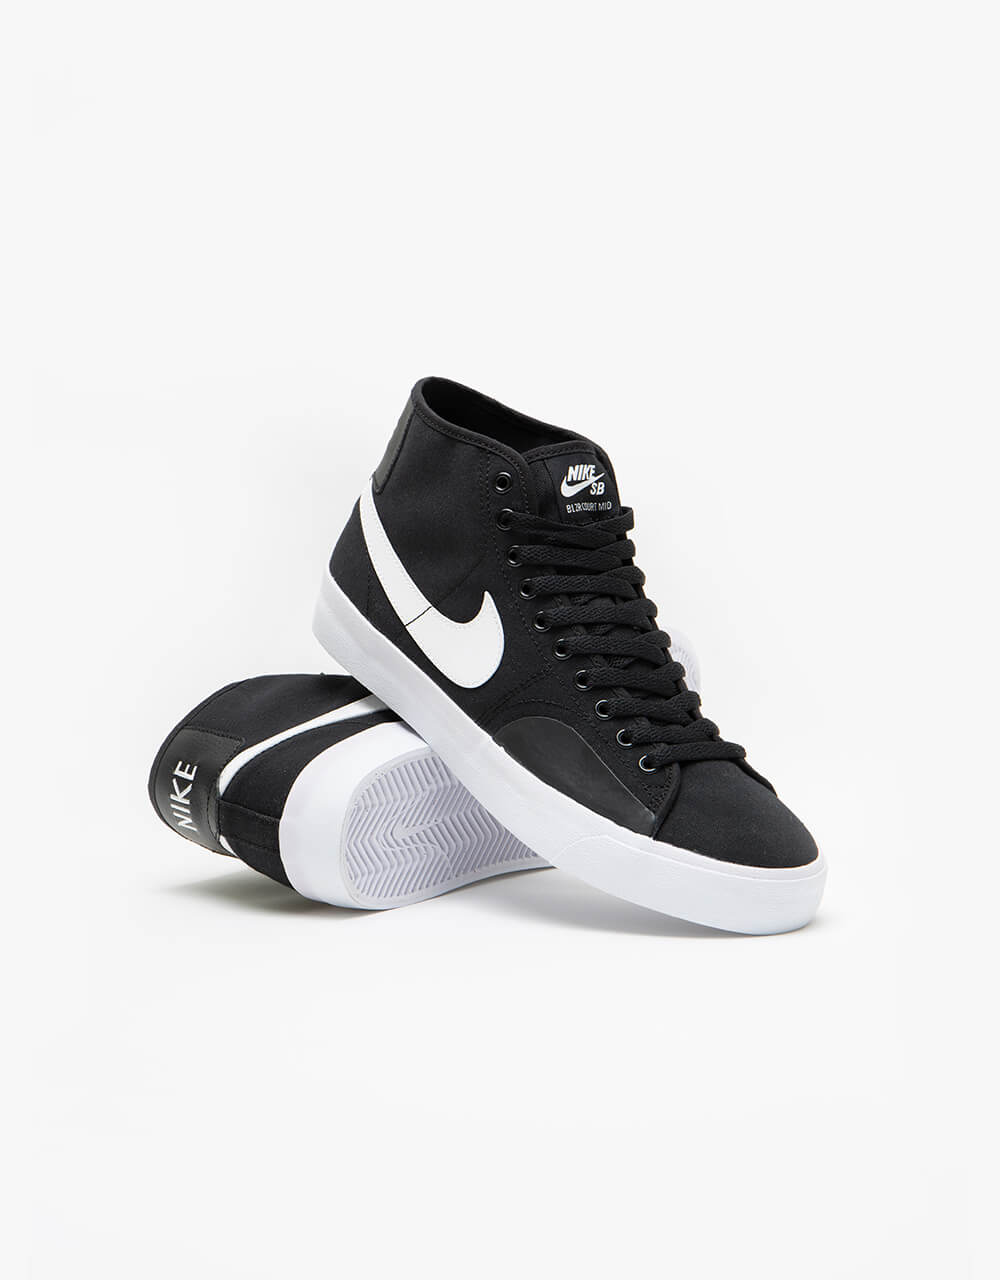 Nike SB BLZR Court Mid Skate Shoes - Black/White-Black